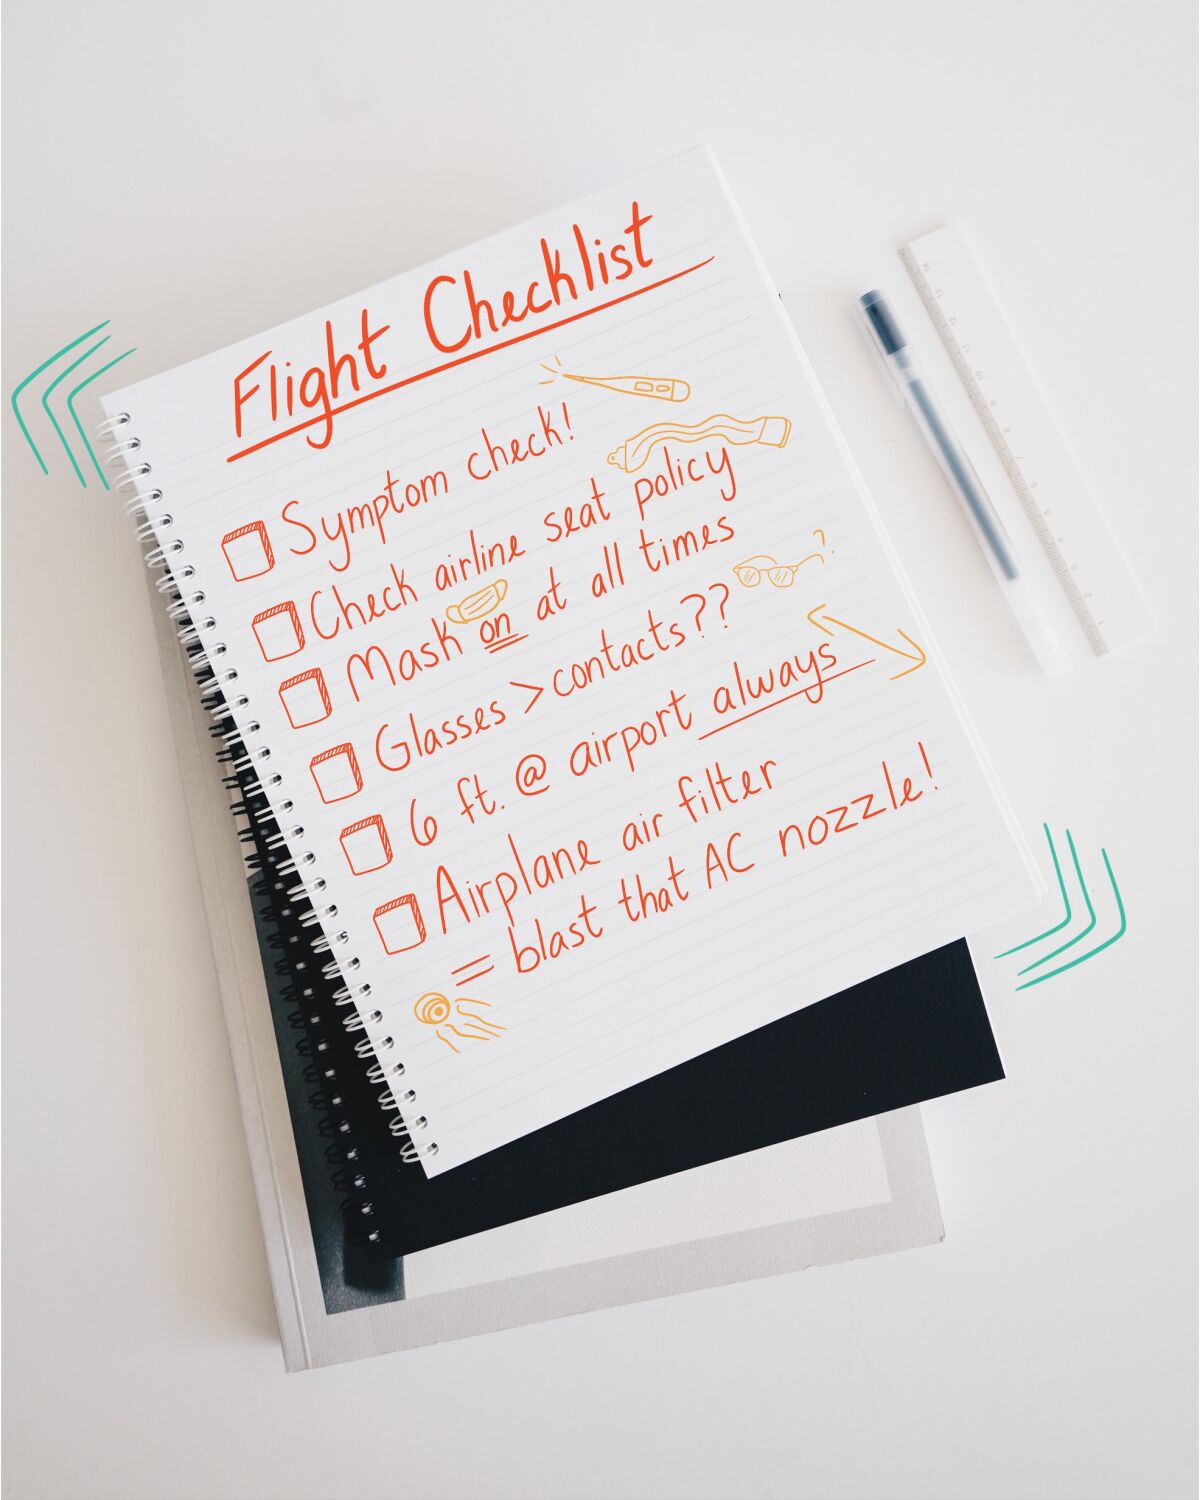 Flight checklist for COVID guidelines.